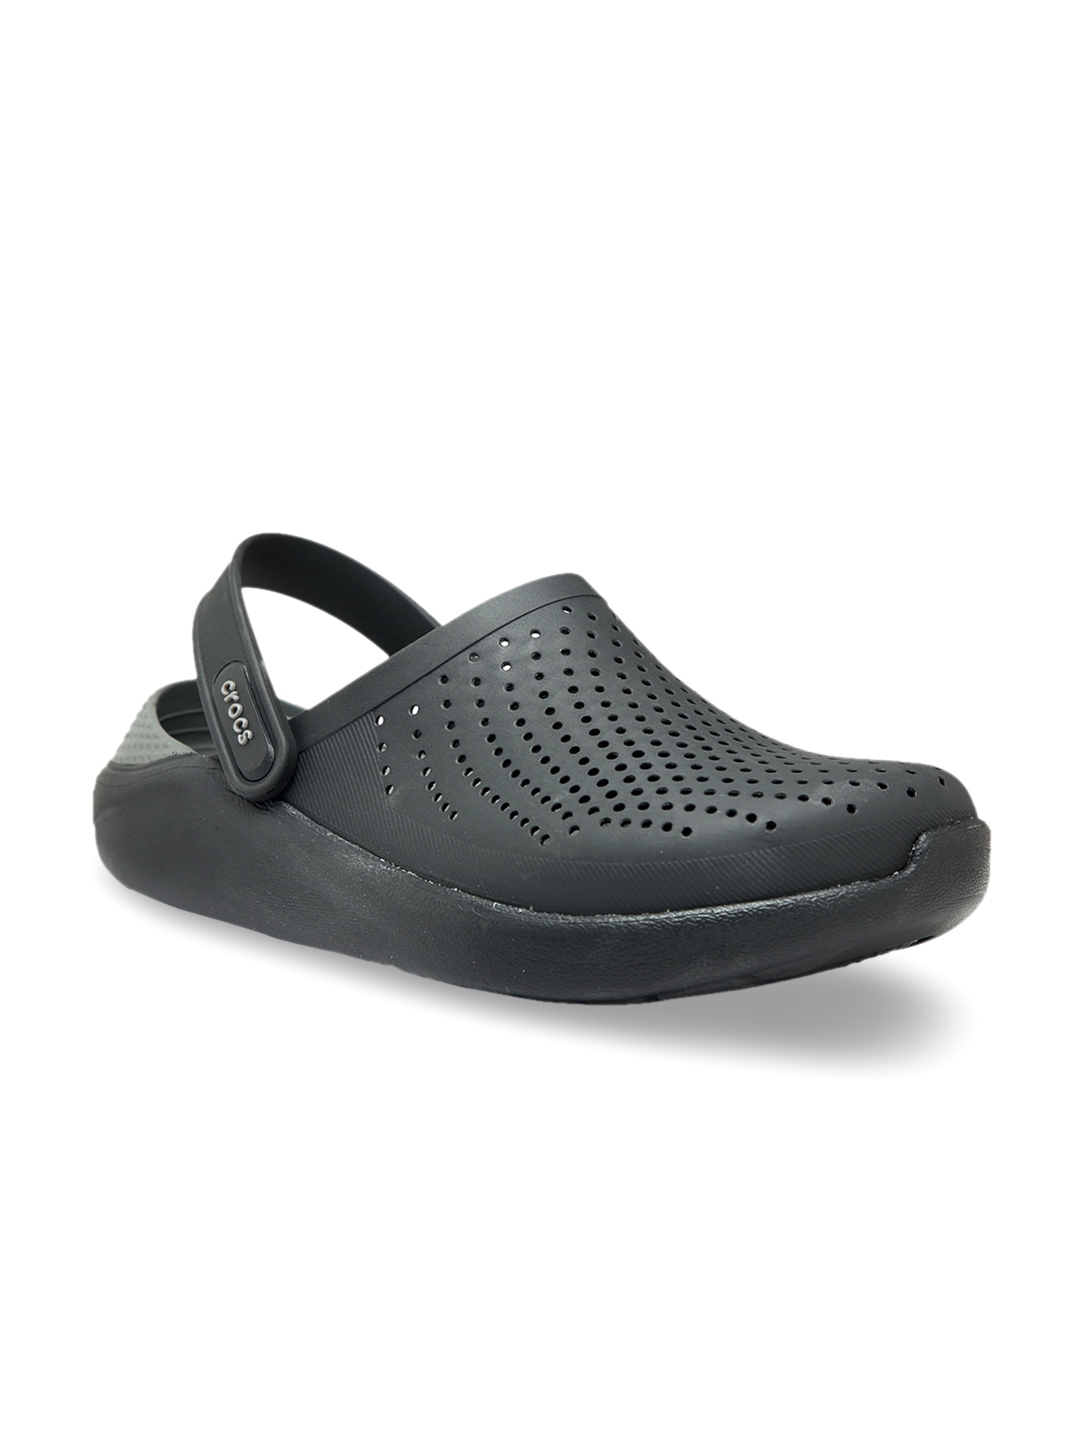 Buy Crocs Men Black Clogs - Sandals for Men 7178372 | Myntra